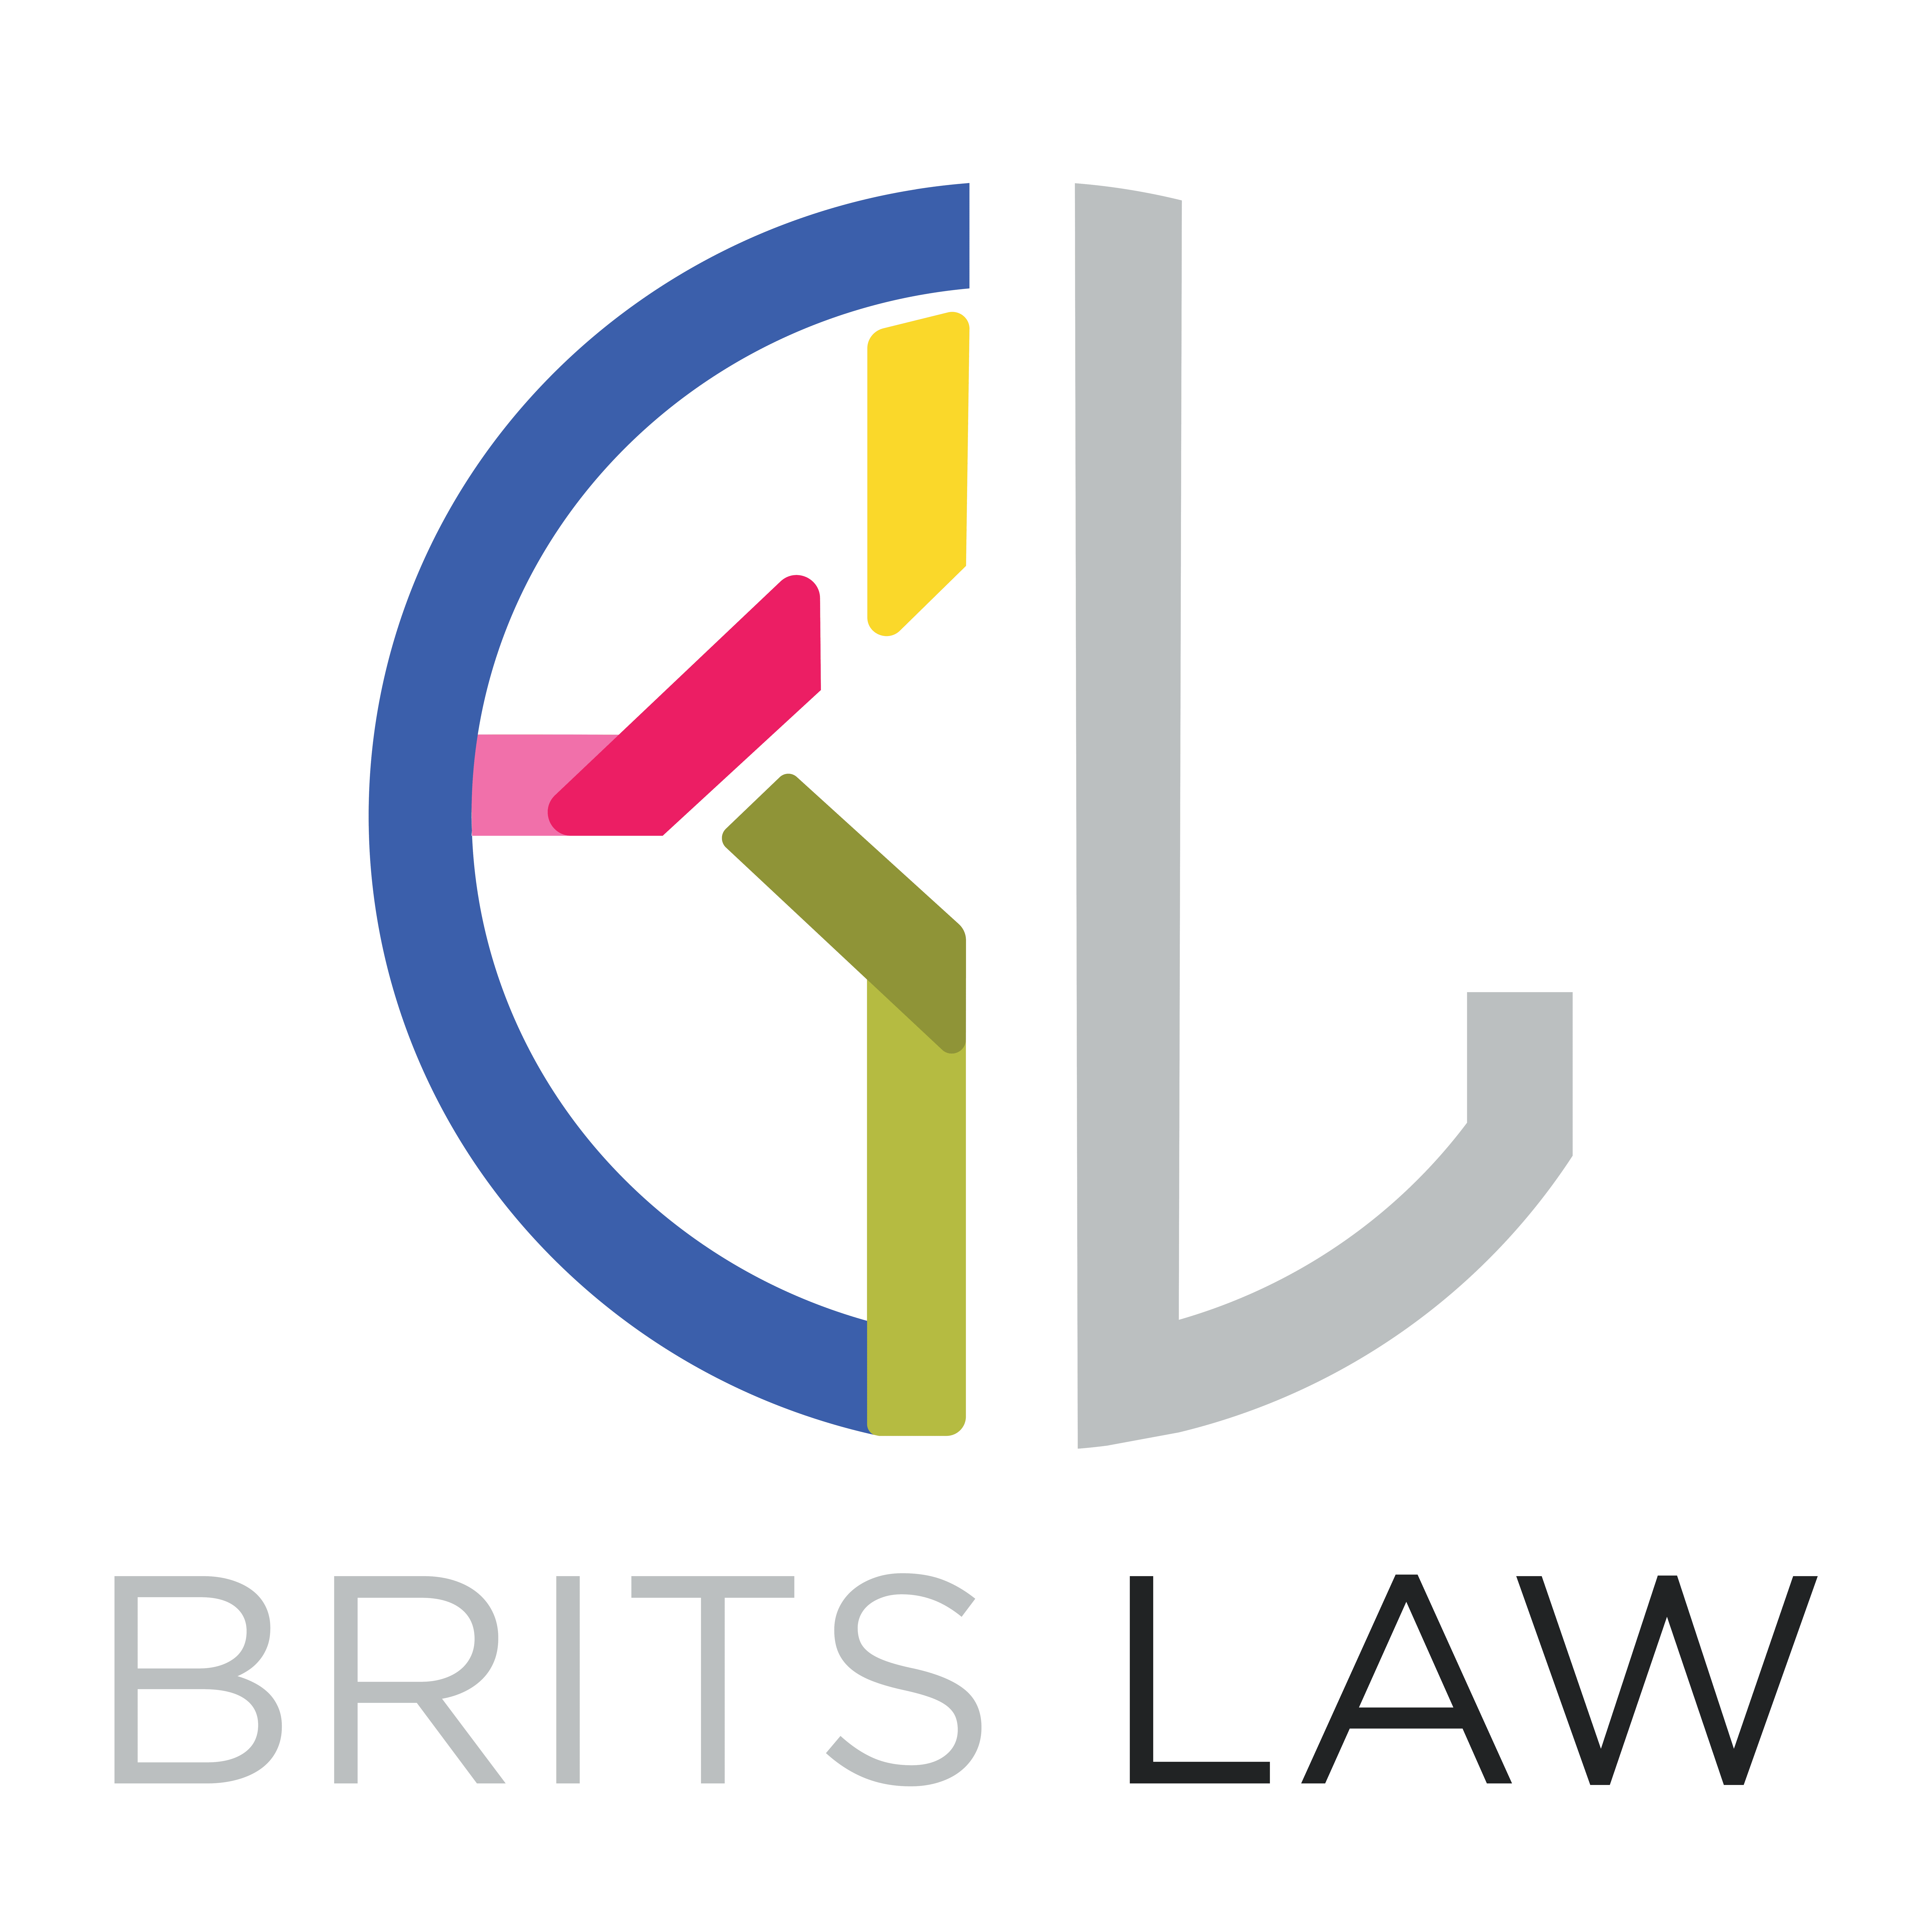 Brits law logo final light